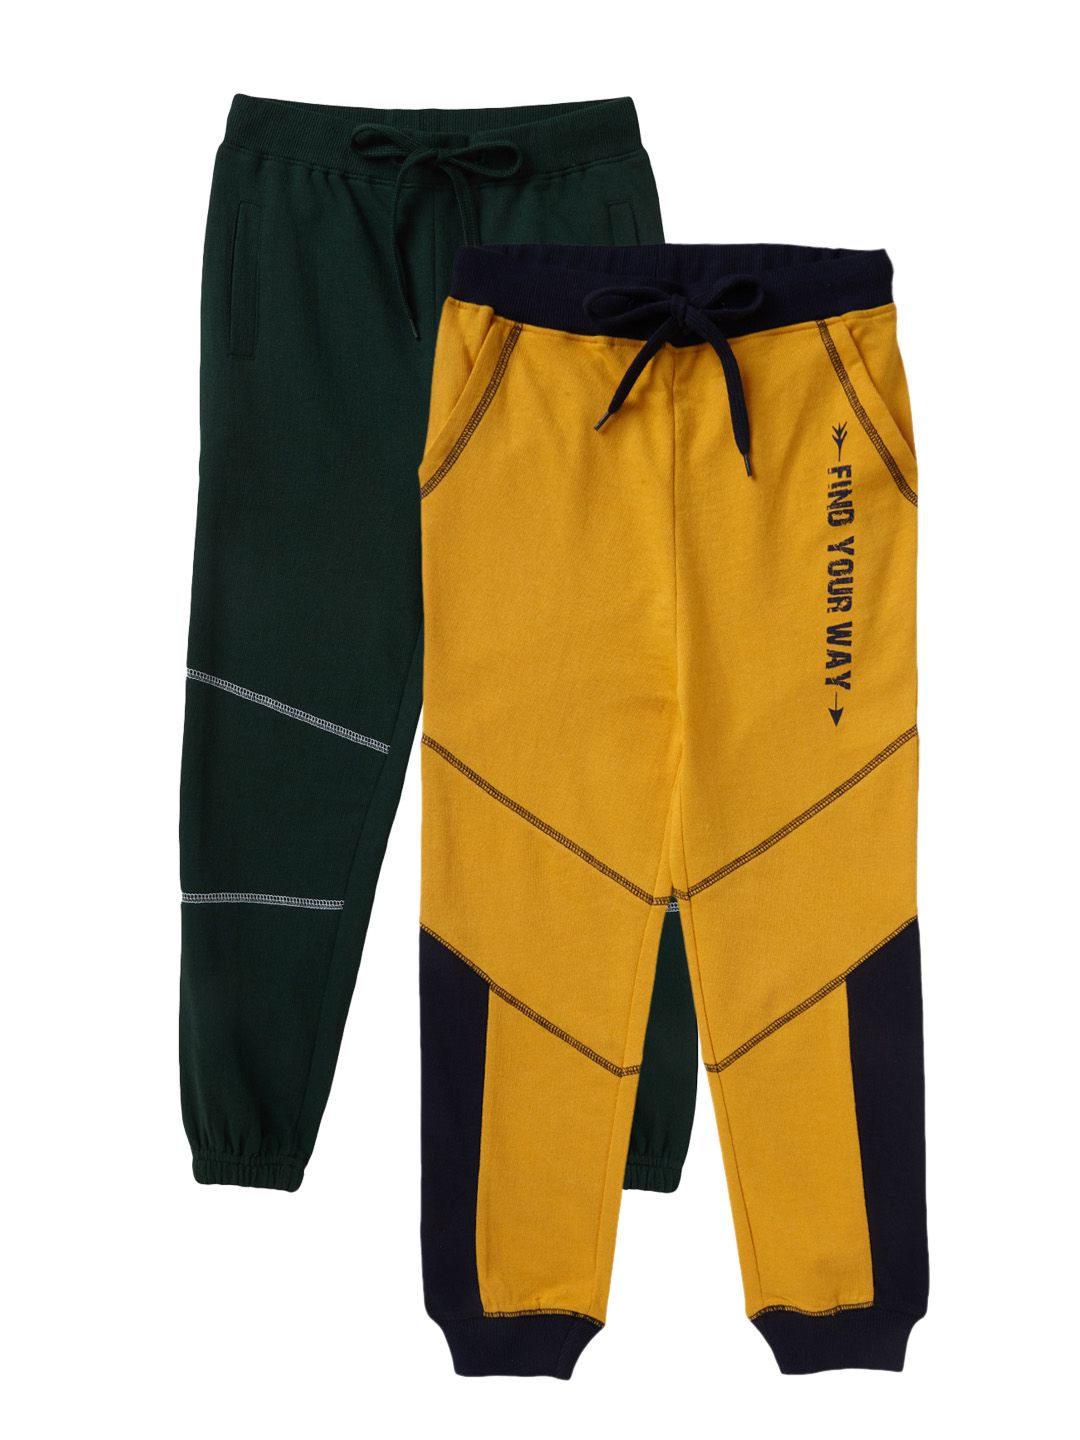 LOKTARC 2 Pack Boys Drawstring Sweatpants Cute Pattern Cotton Sport Jogger Pants 